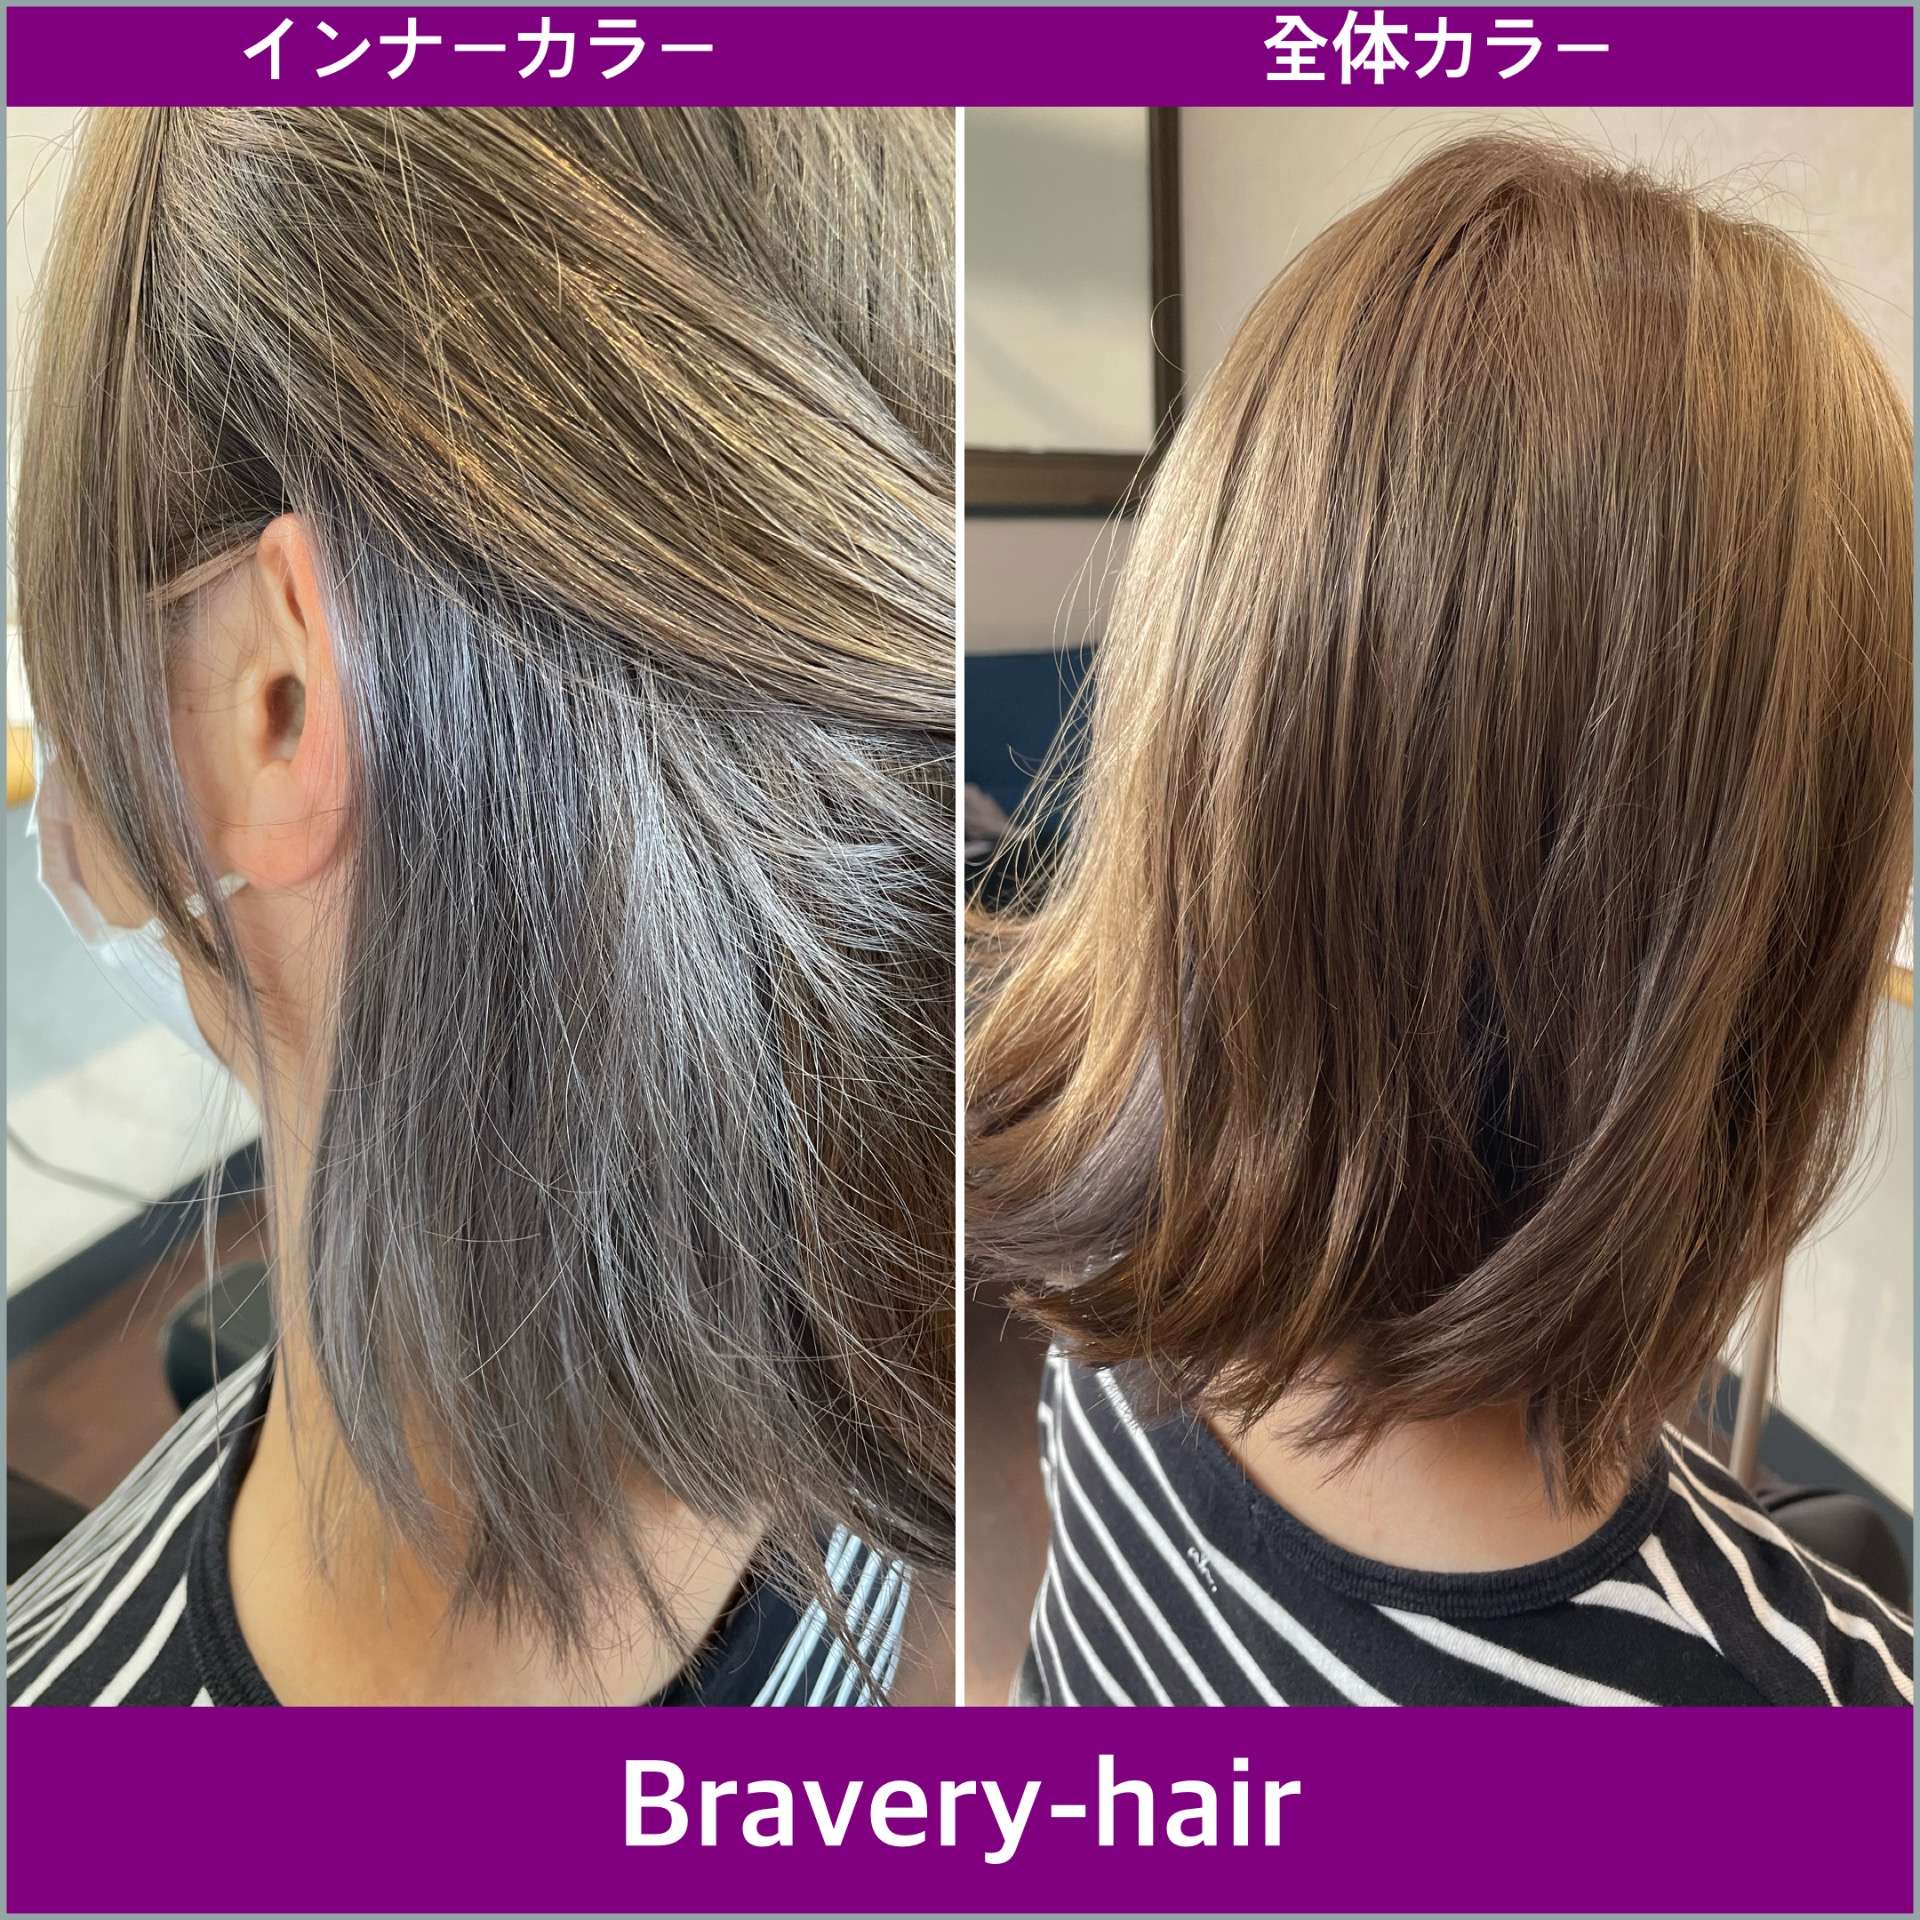 Bravery-hairで出来る簡単な髪質改善のウル艶トリートメントのご紹介とゆめシャンのご紹介！